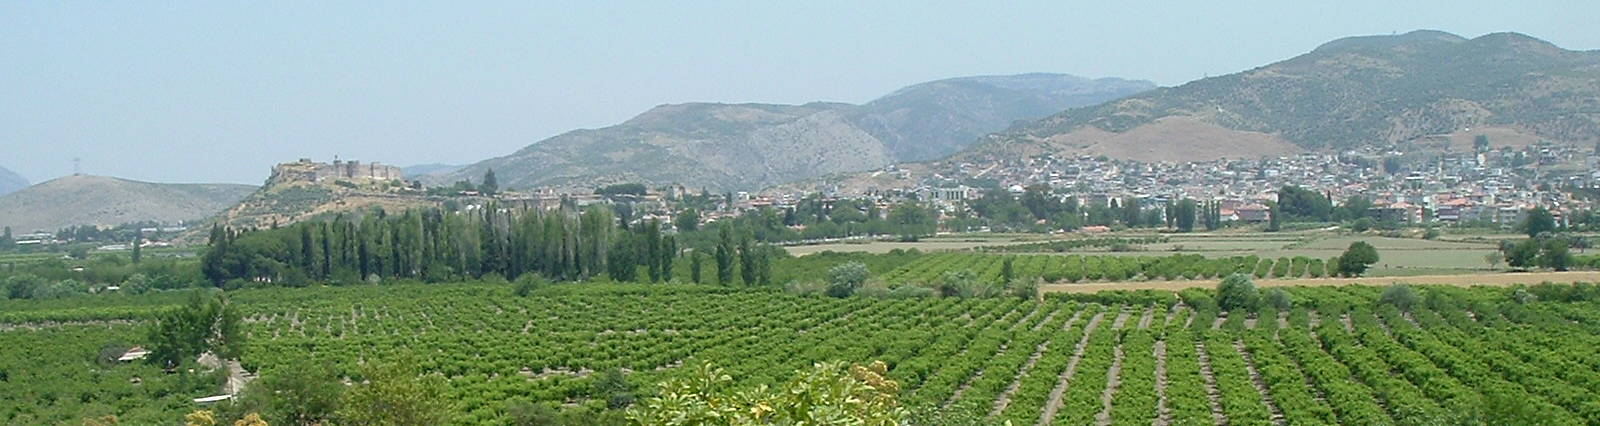 Selçuk as seen from near Ephesus.